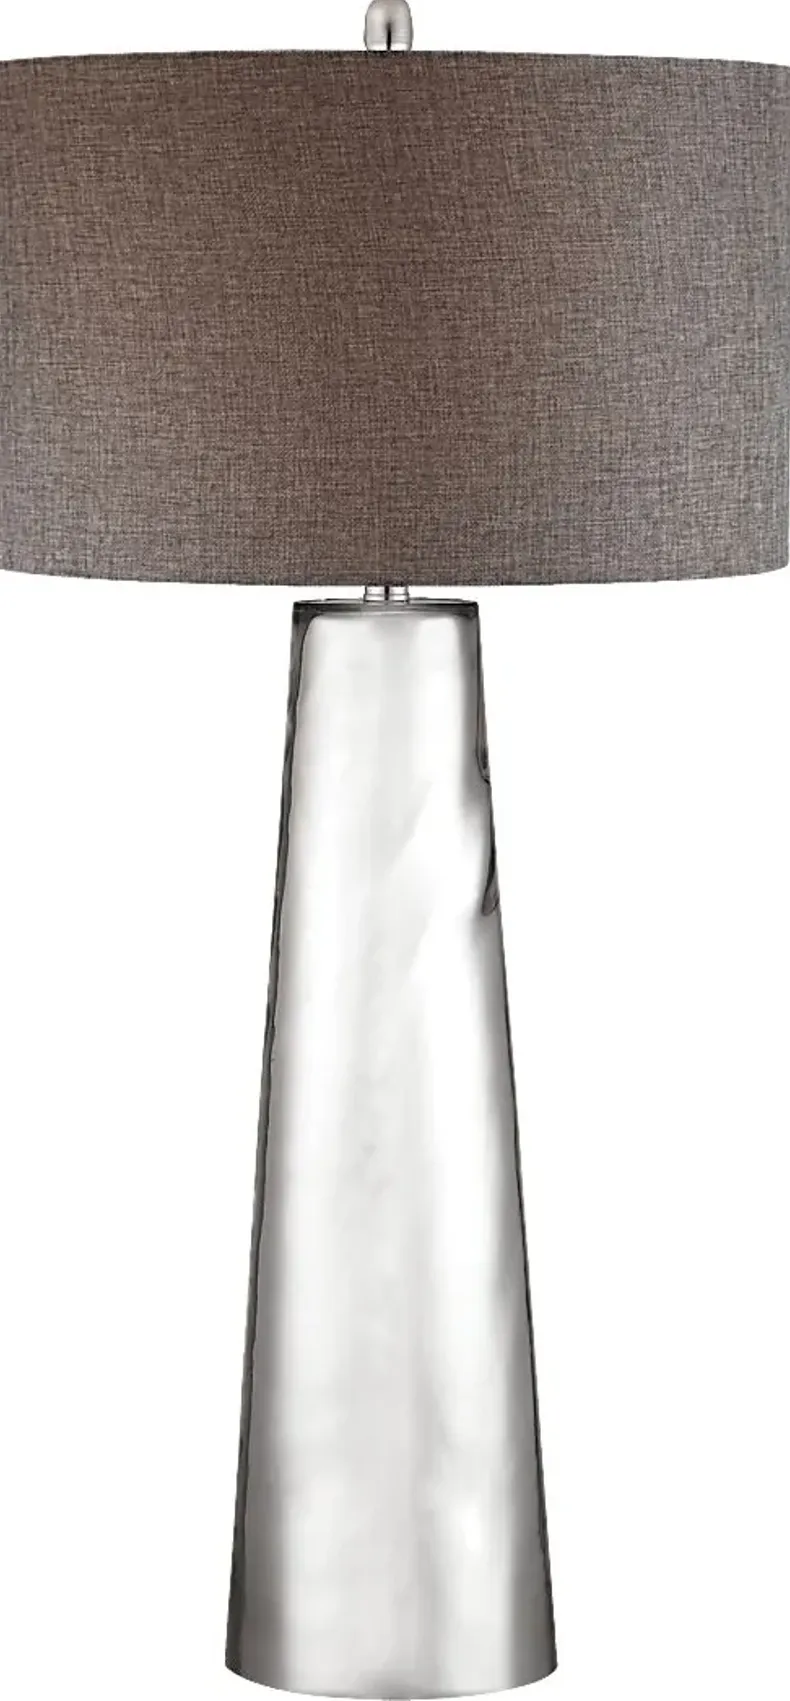 Windlass Creek Silver Lamp